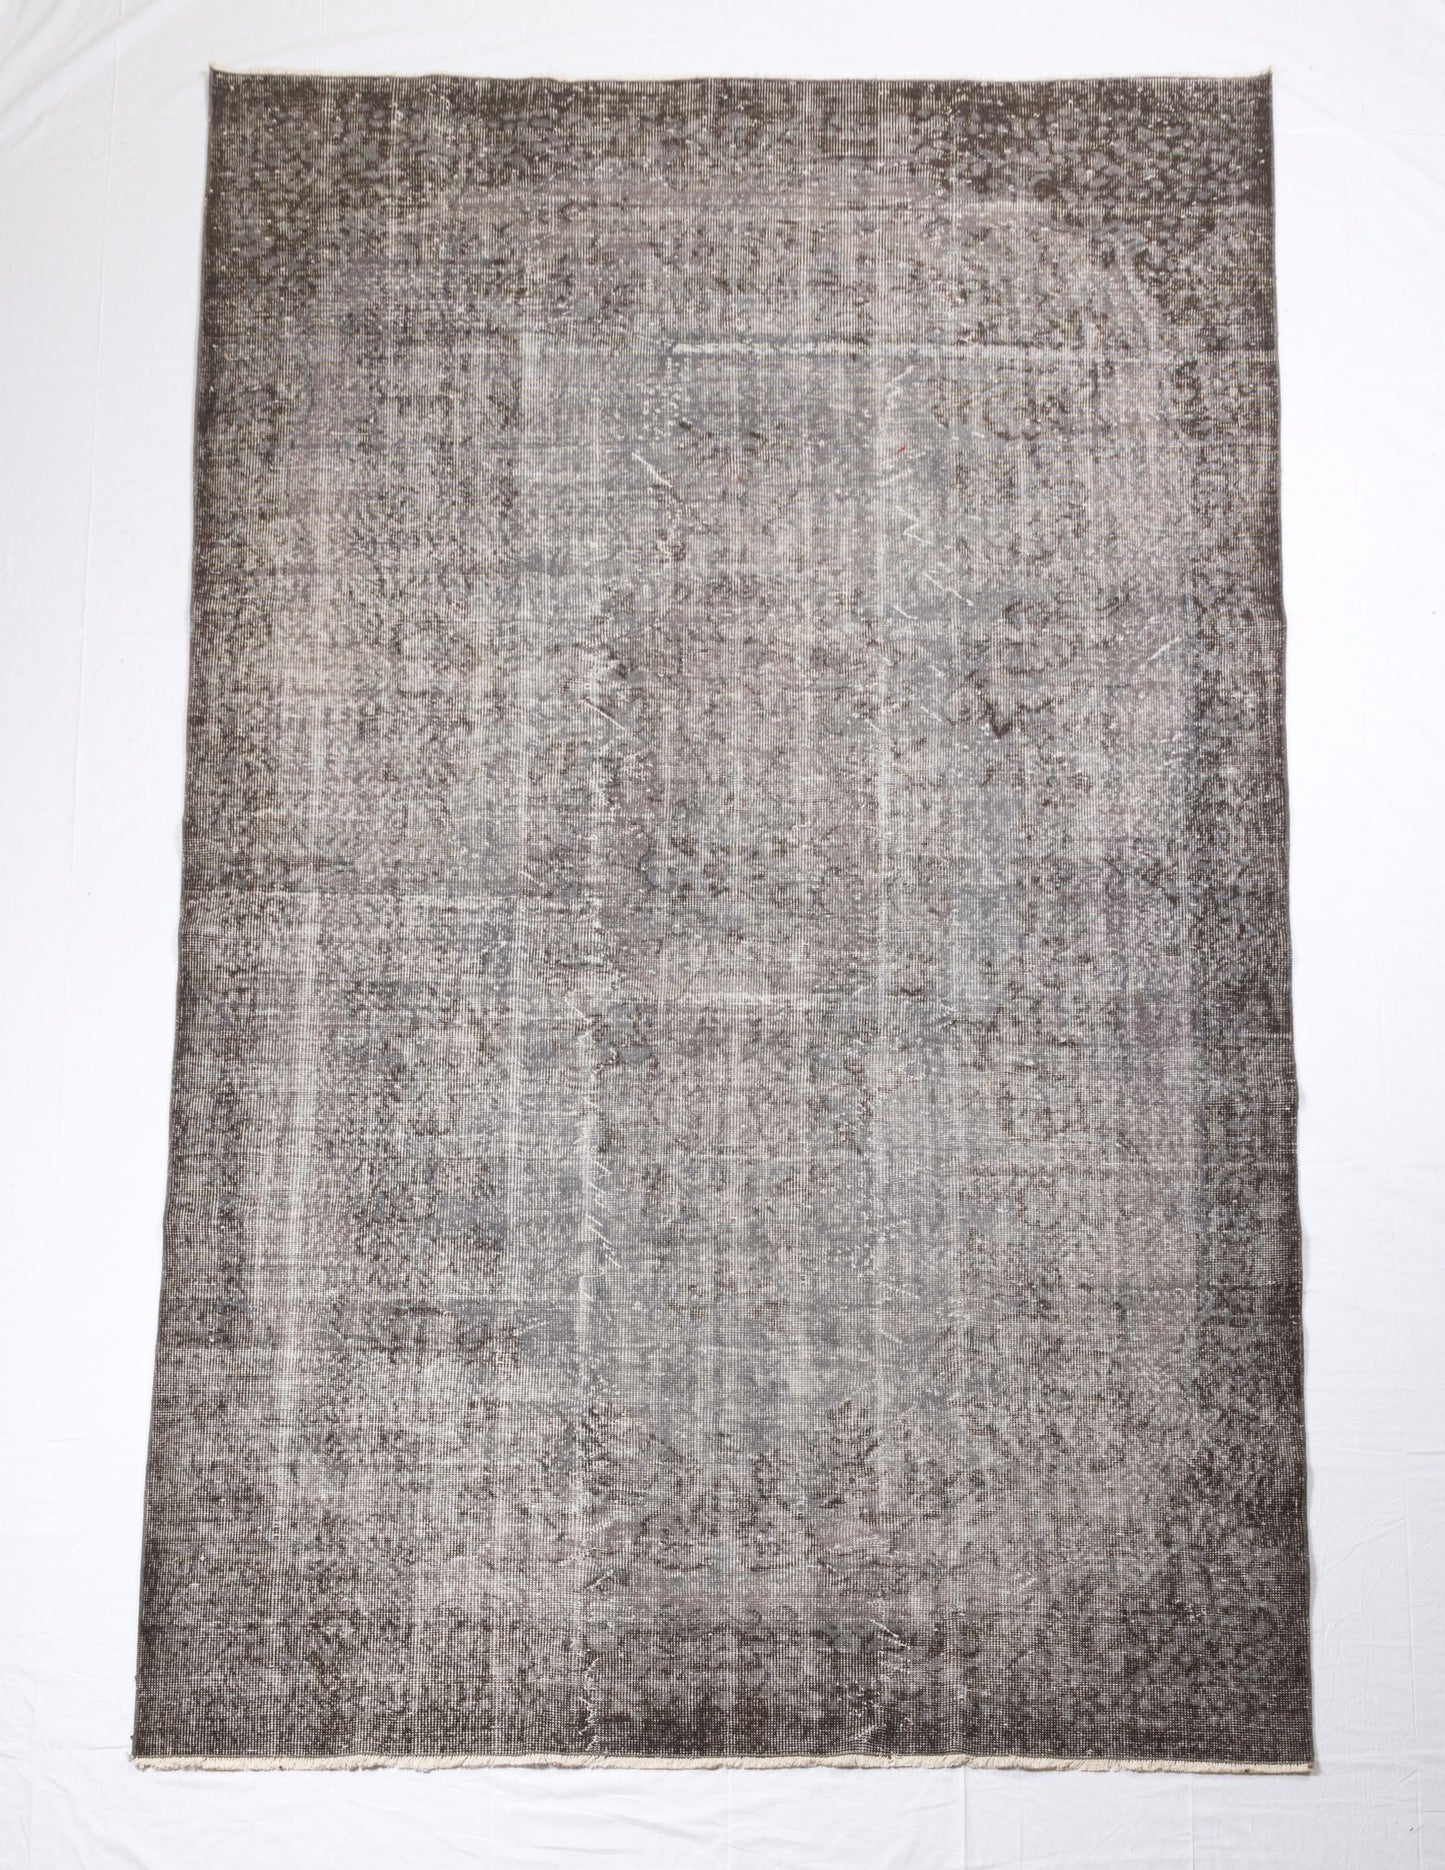 Vintage matto, koko 311x192 cm, 50+ vuotta